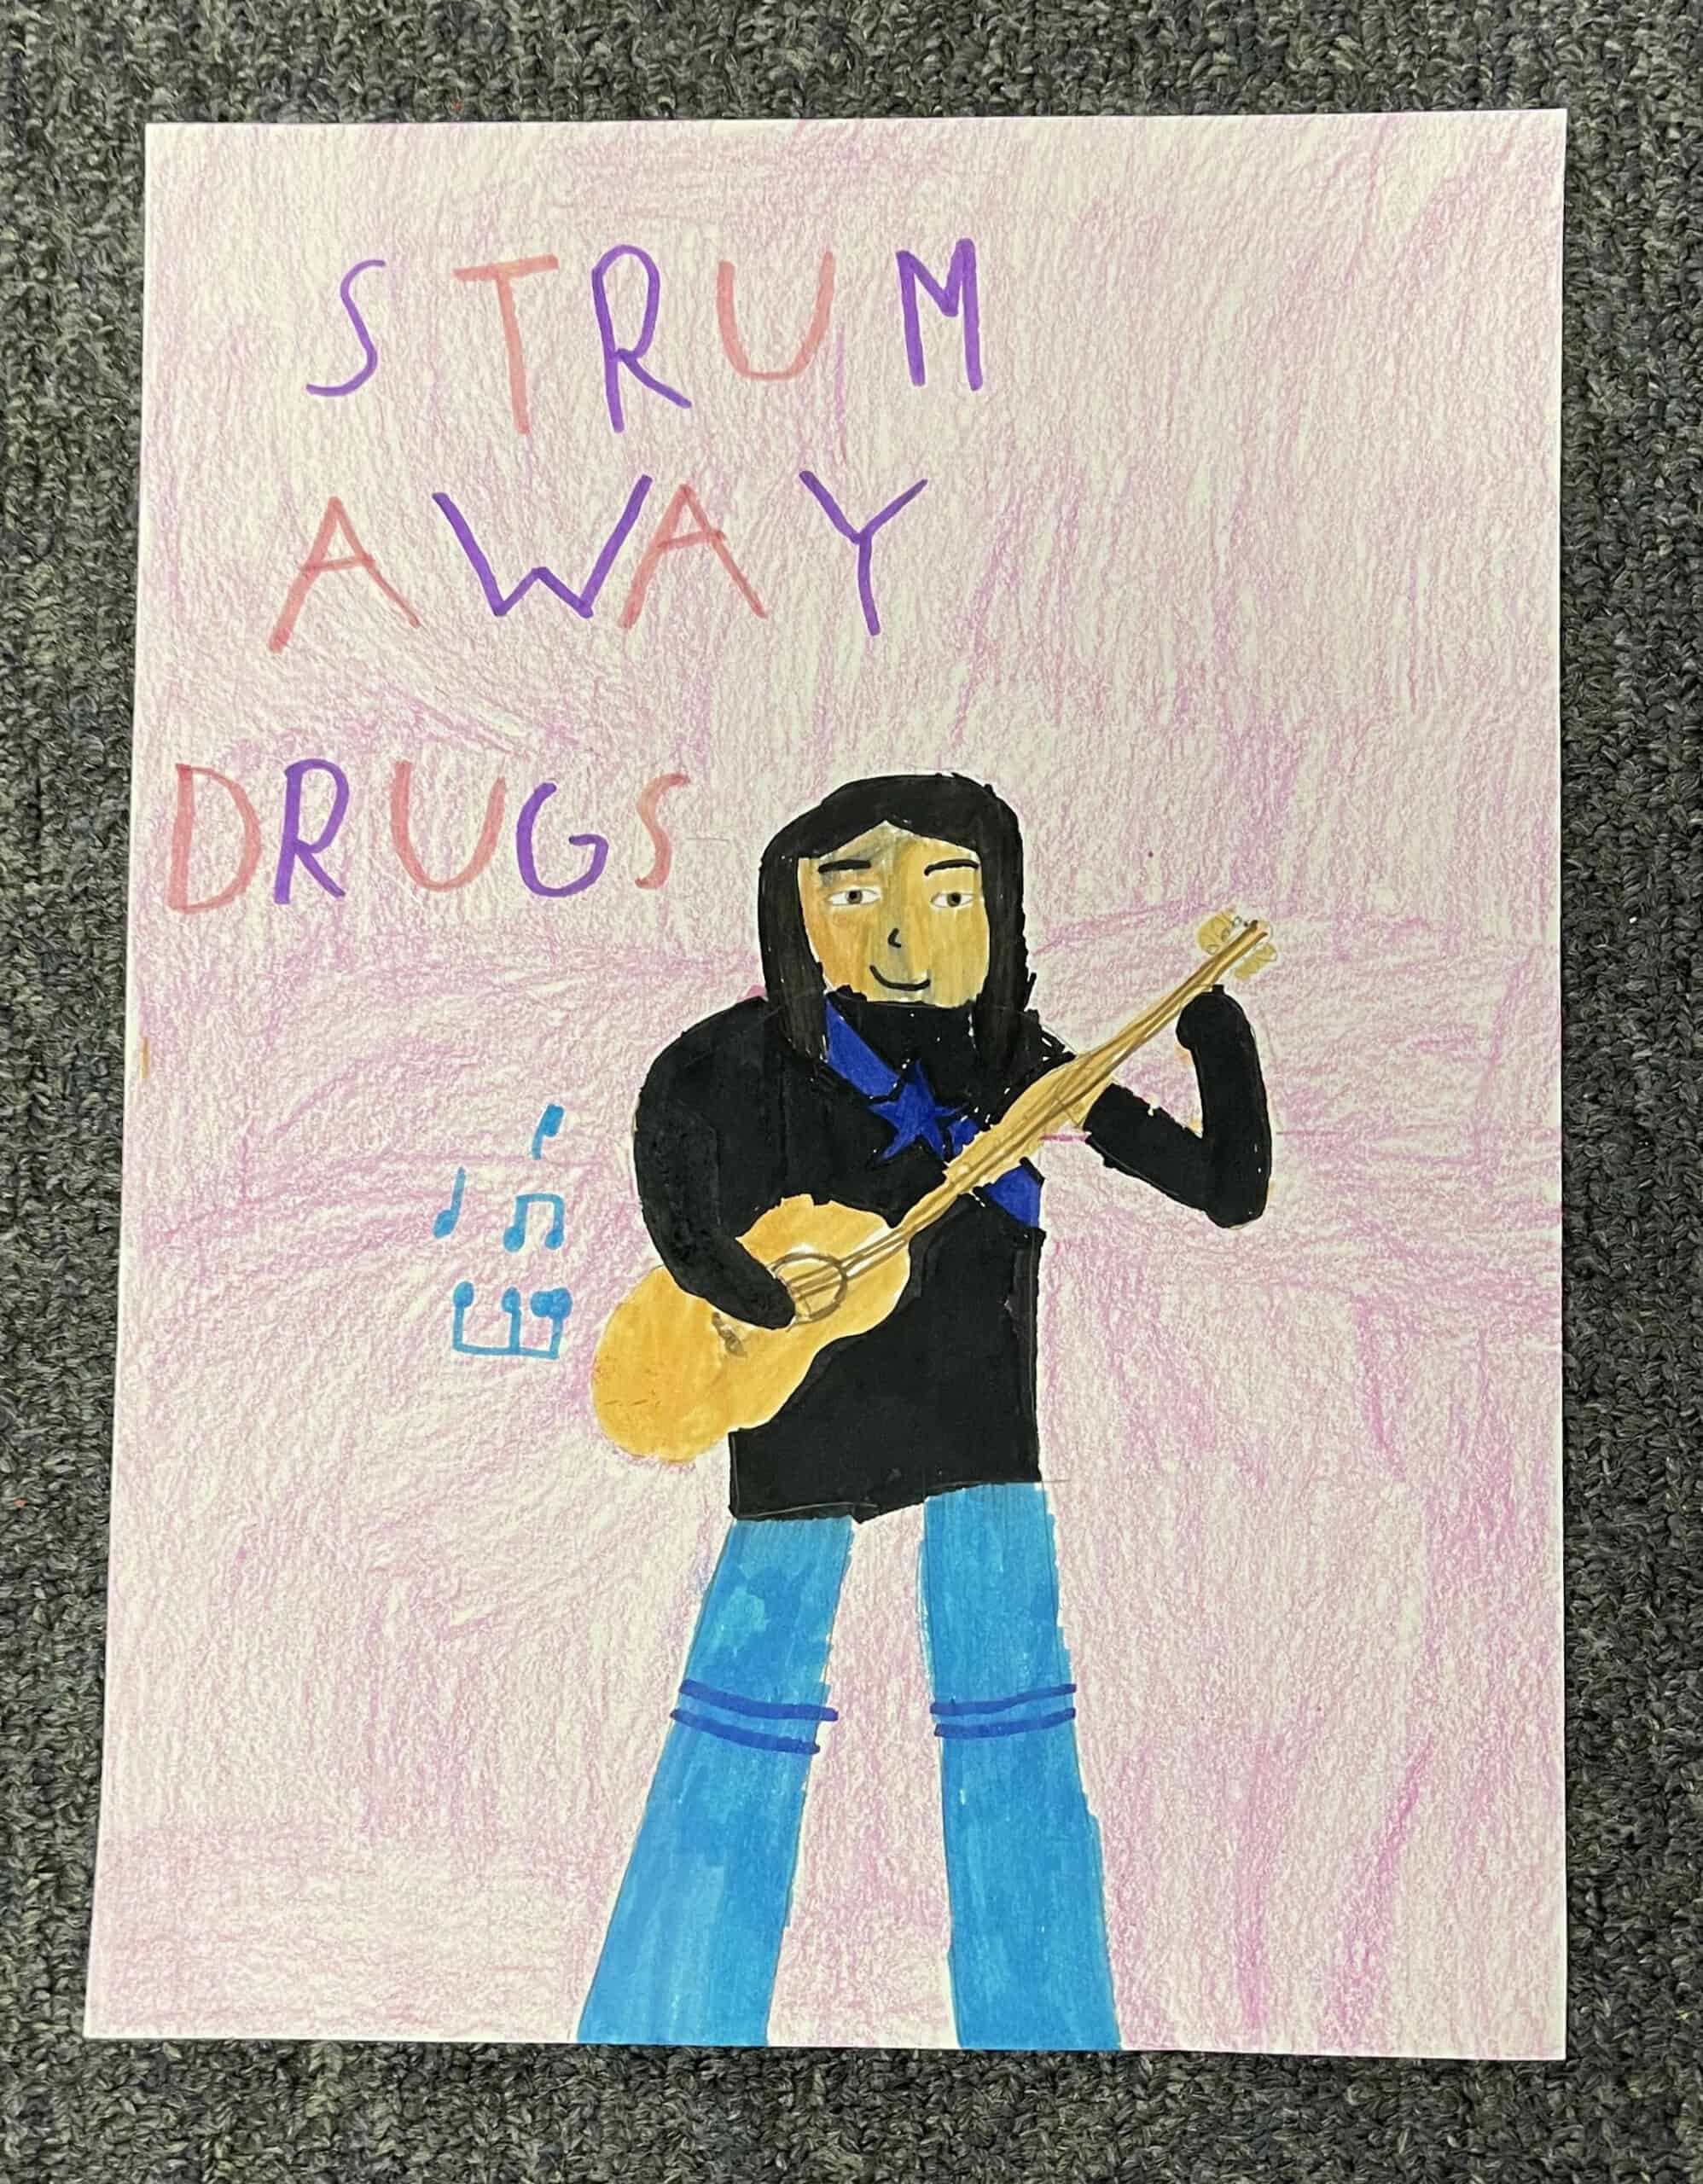 Strum Away Drugs